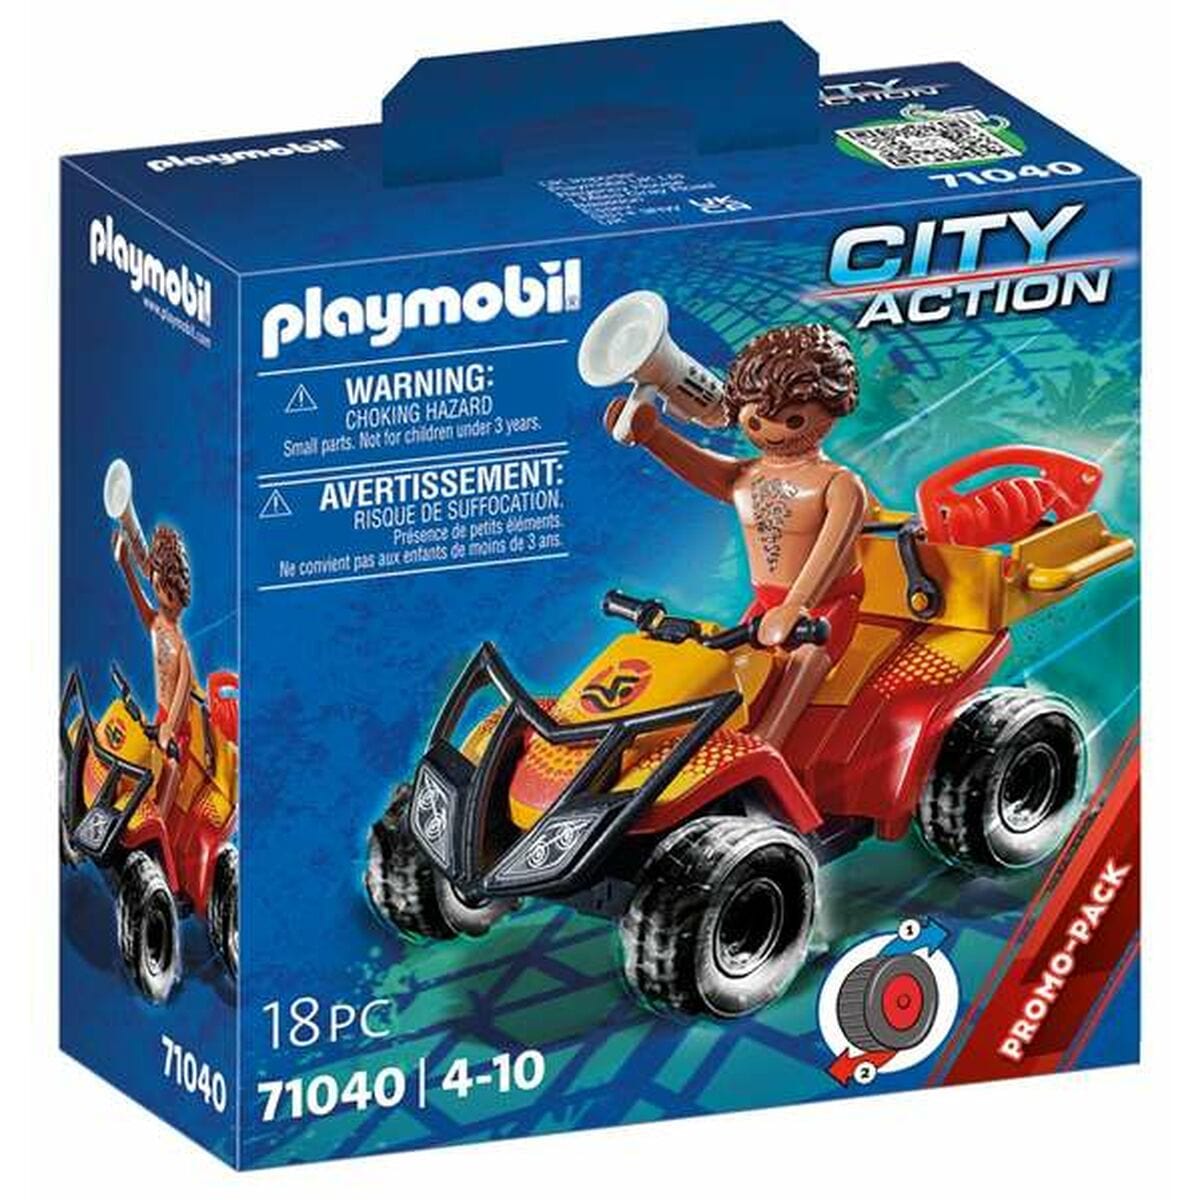 Playmobil Spielzeug | Kostüme > Spielzeug und Spiele > Weiteres spielzeug Playset Playmobil City Action Rescue Quad  18 Stücke 71040